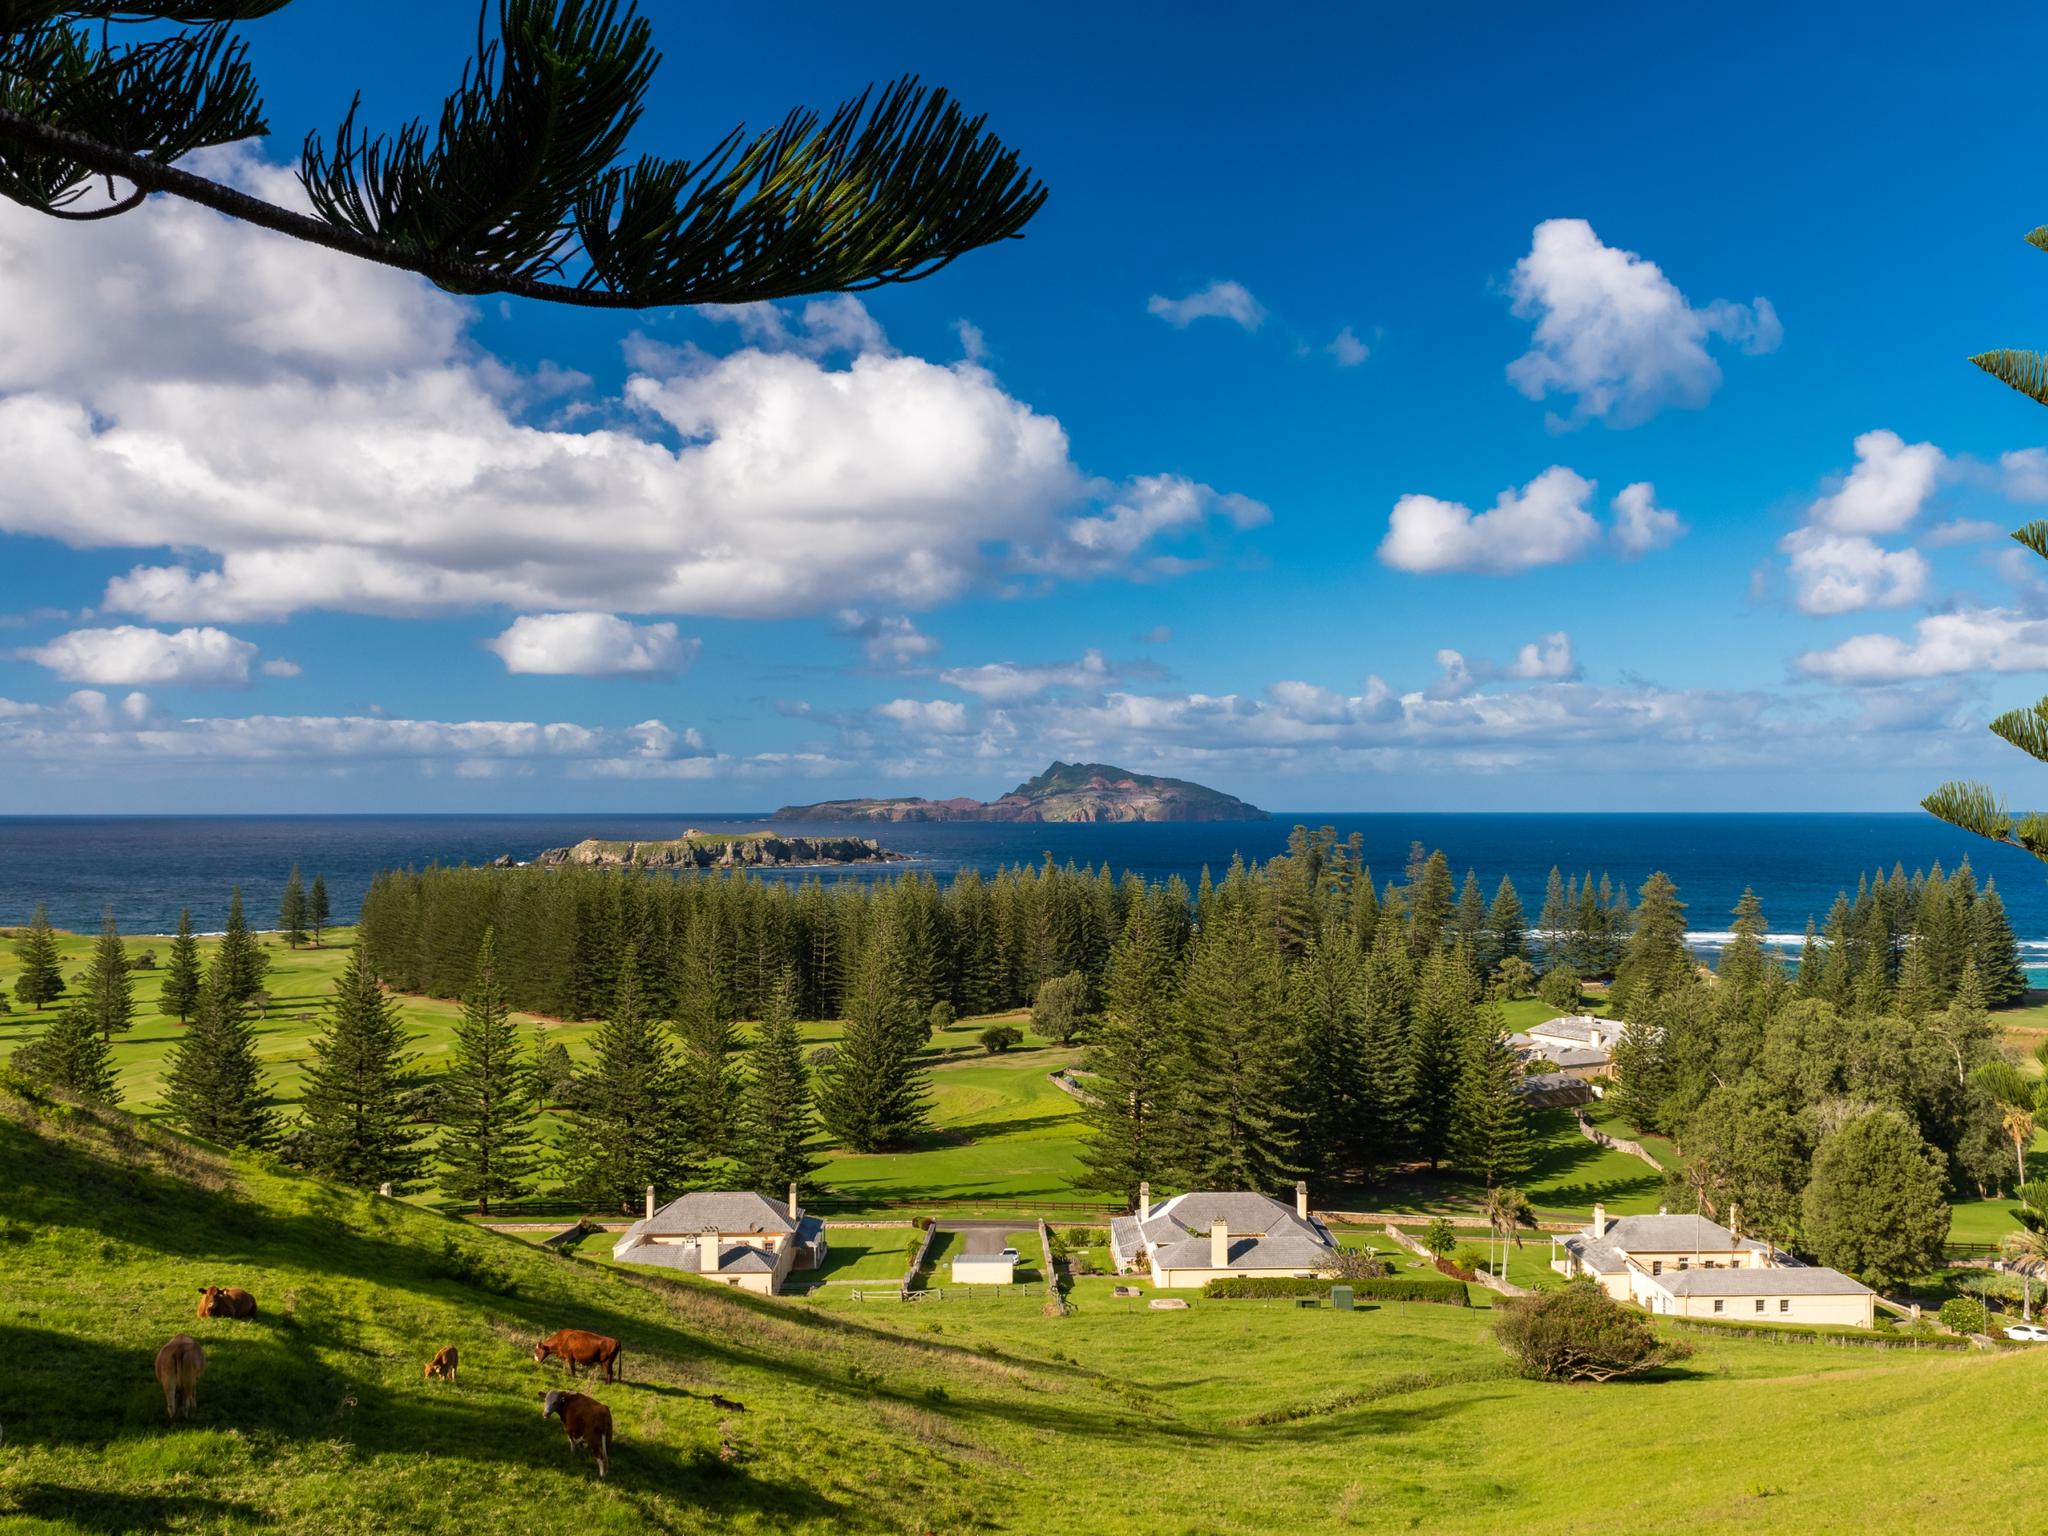 Norfolk Island: The Australian island that feels like another